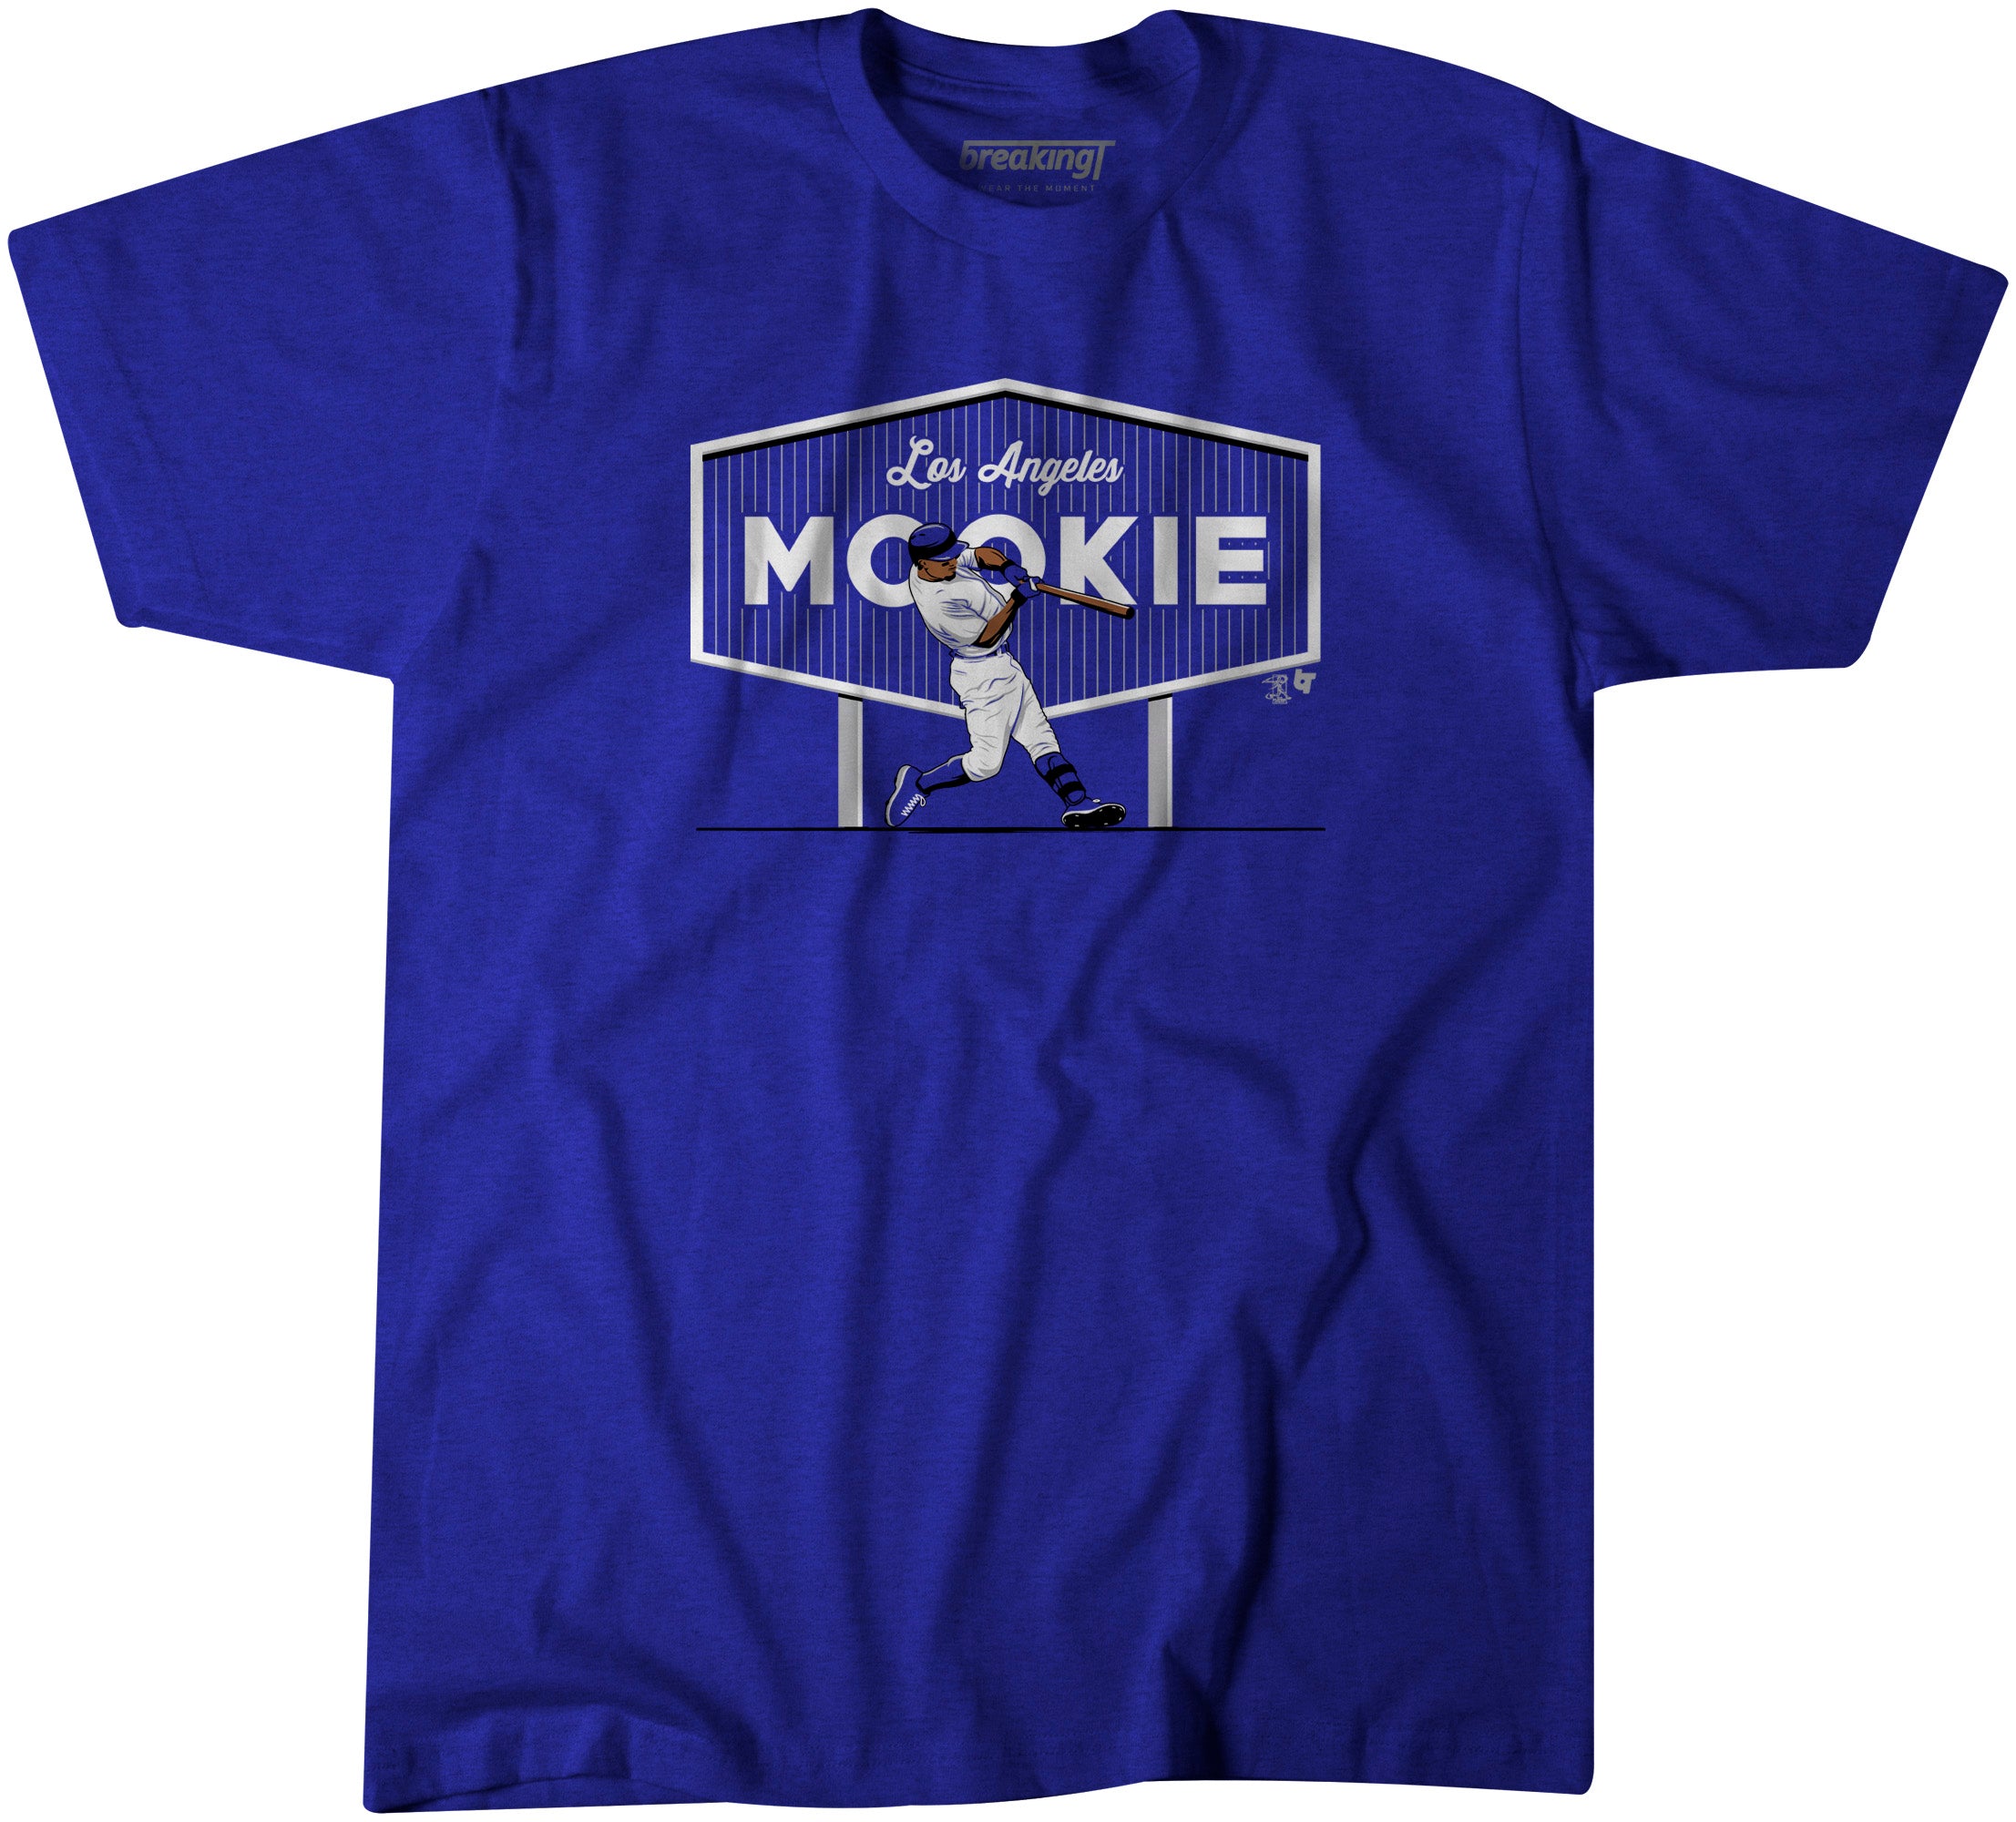 Official La Mookie Betts Los Angeles Dodgers Shirt